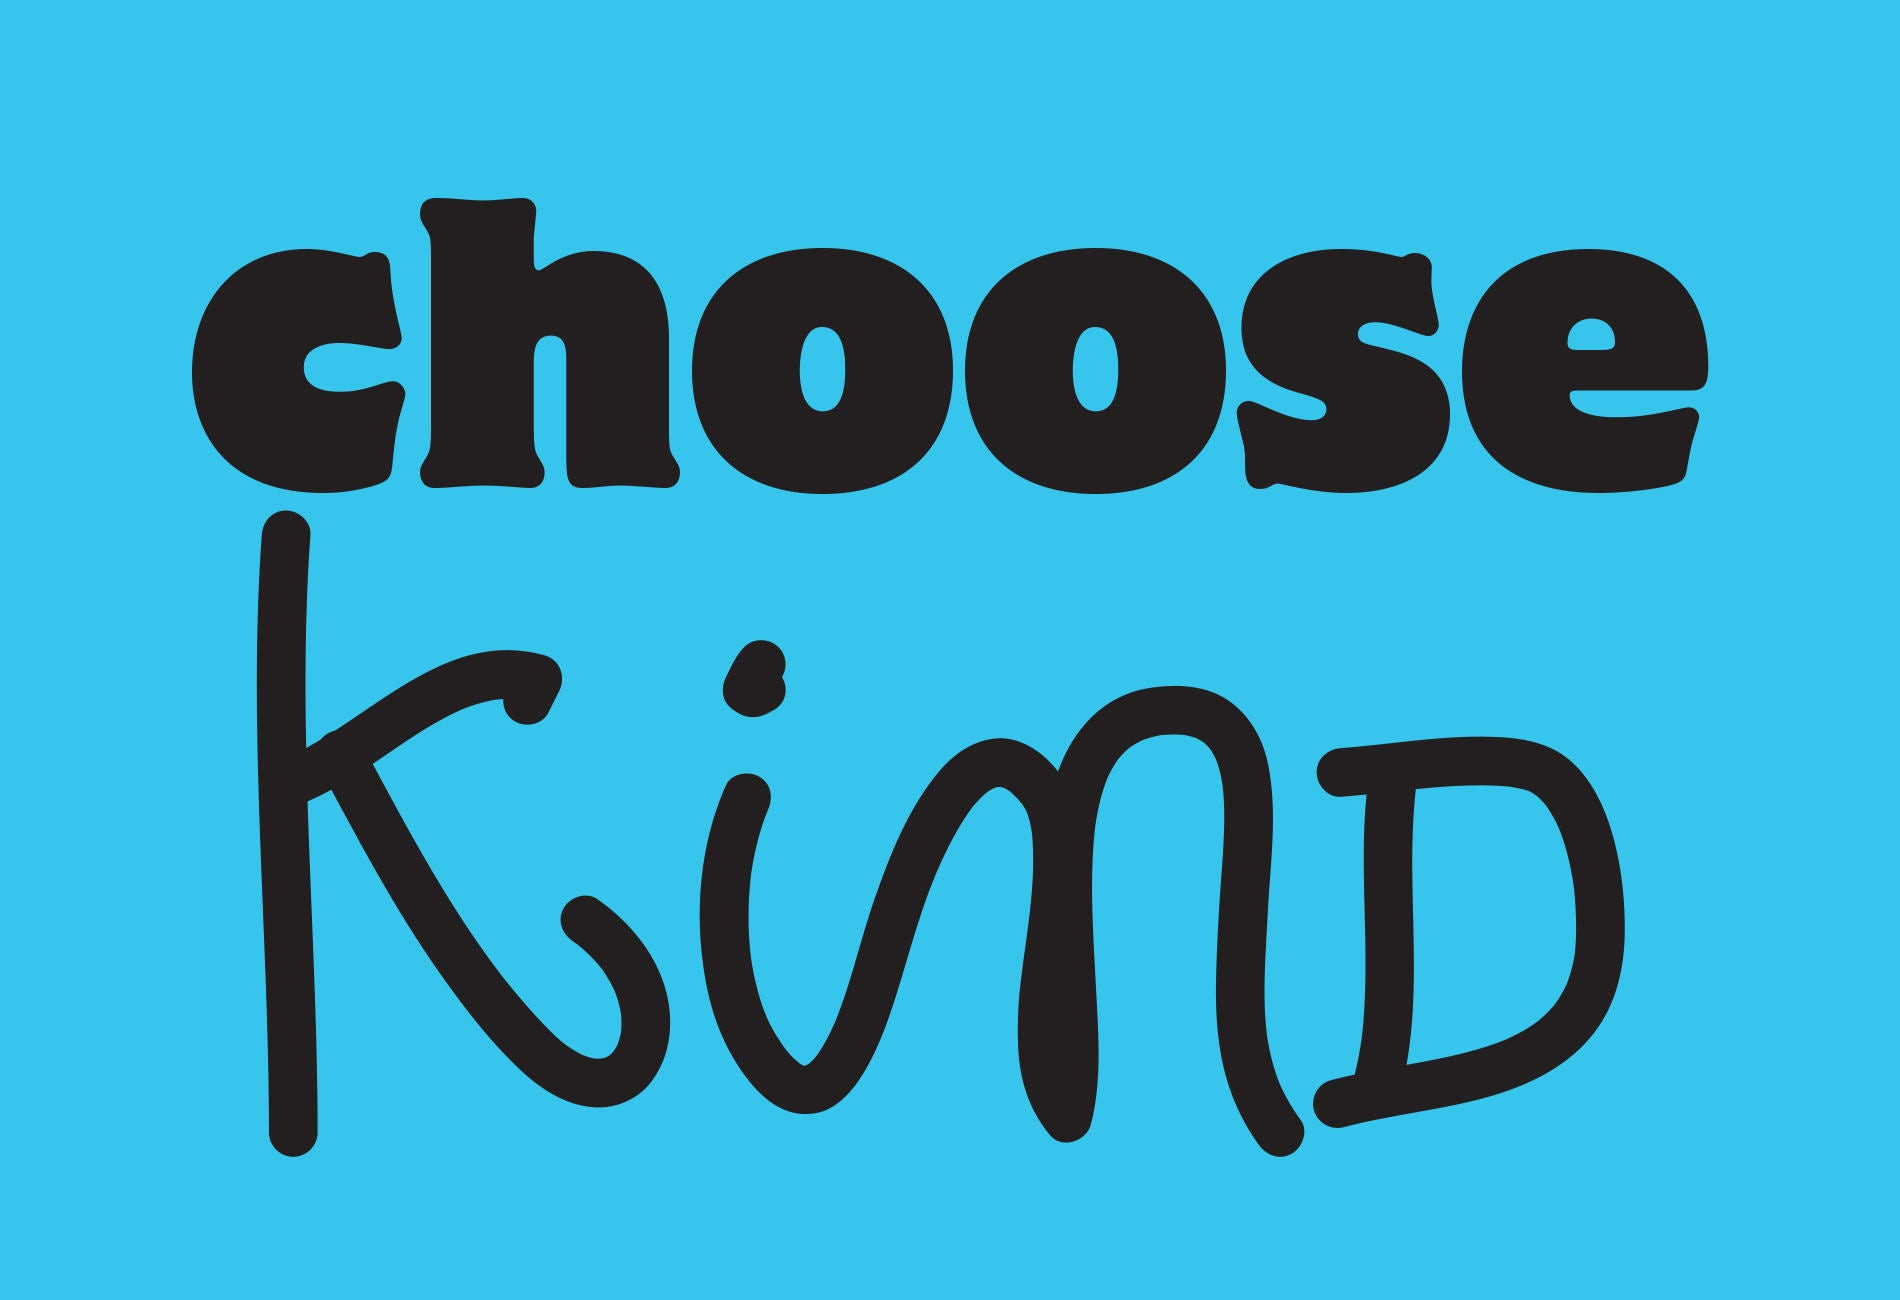 Kindness Quotes From Wonder
 Choose Kind Wonder poster RJ Palacio classroom decoration